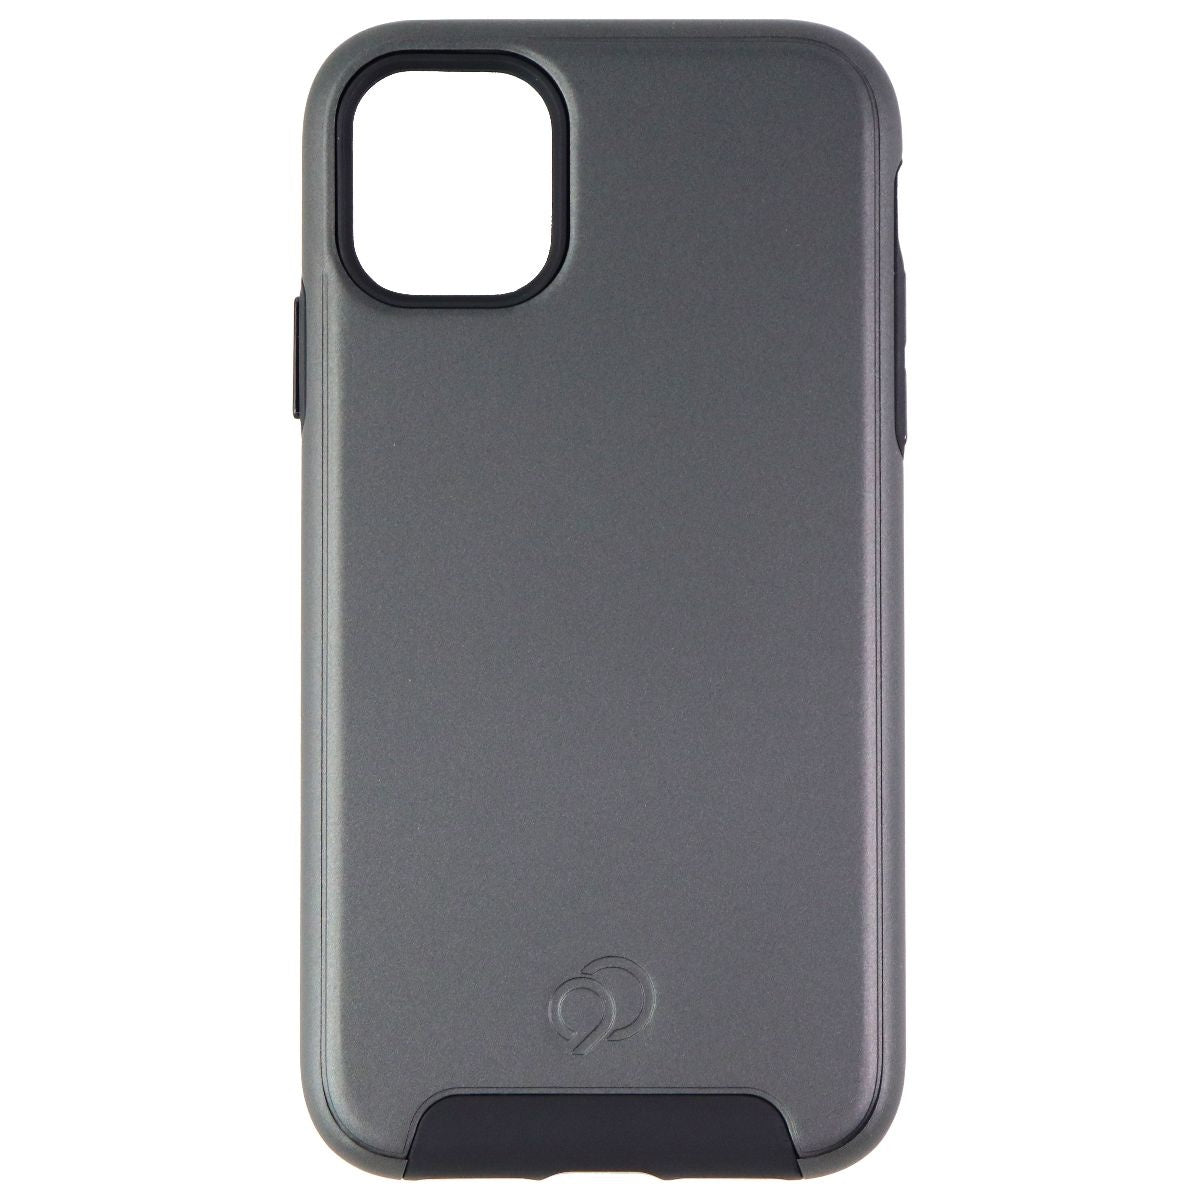 Nimbus9 Cirrus 2 Series Hard Case for Apple iPhone 11 - Gunmetal Gray / Black Cell Phone - Cases, Covers & Skins Nimbus9    - Simple Cell Bulk Wholesale Pricing - USA Seller